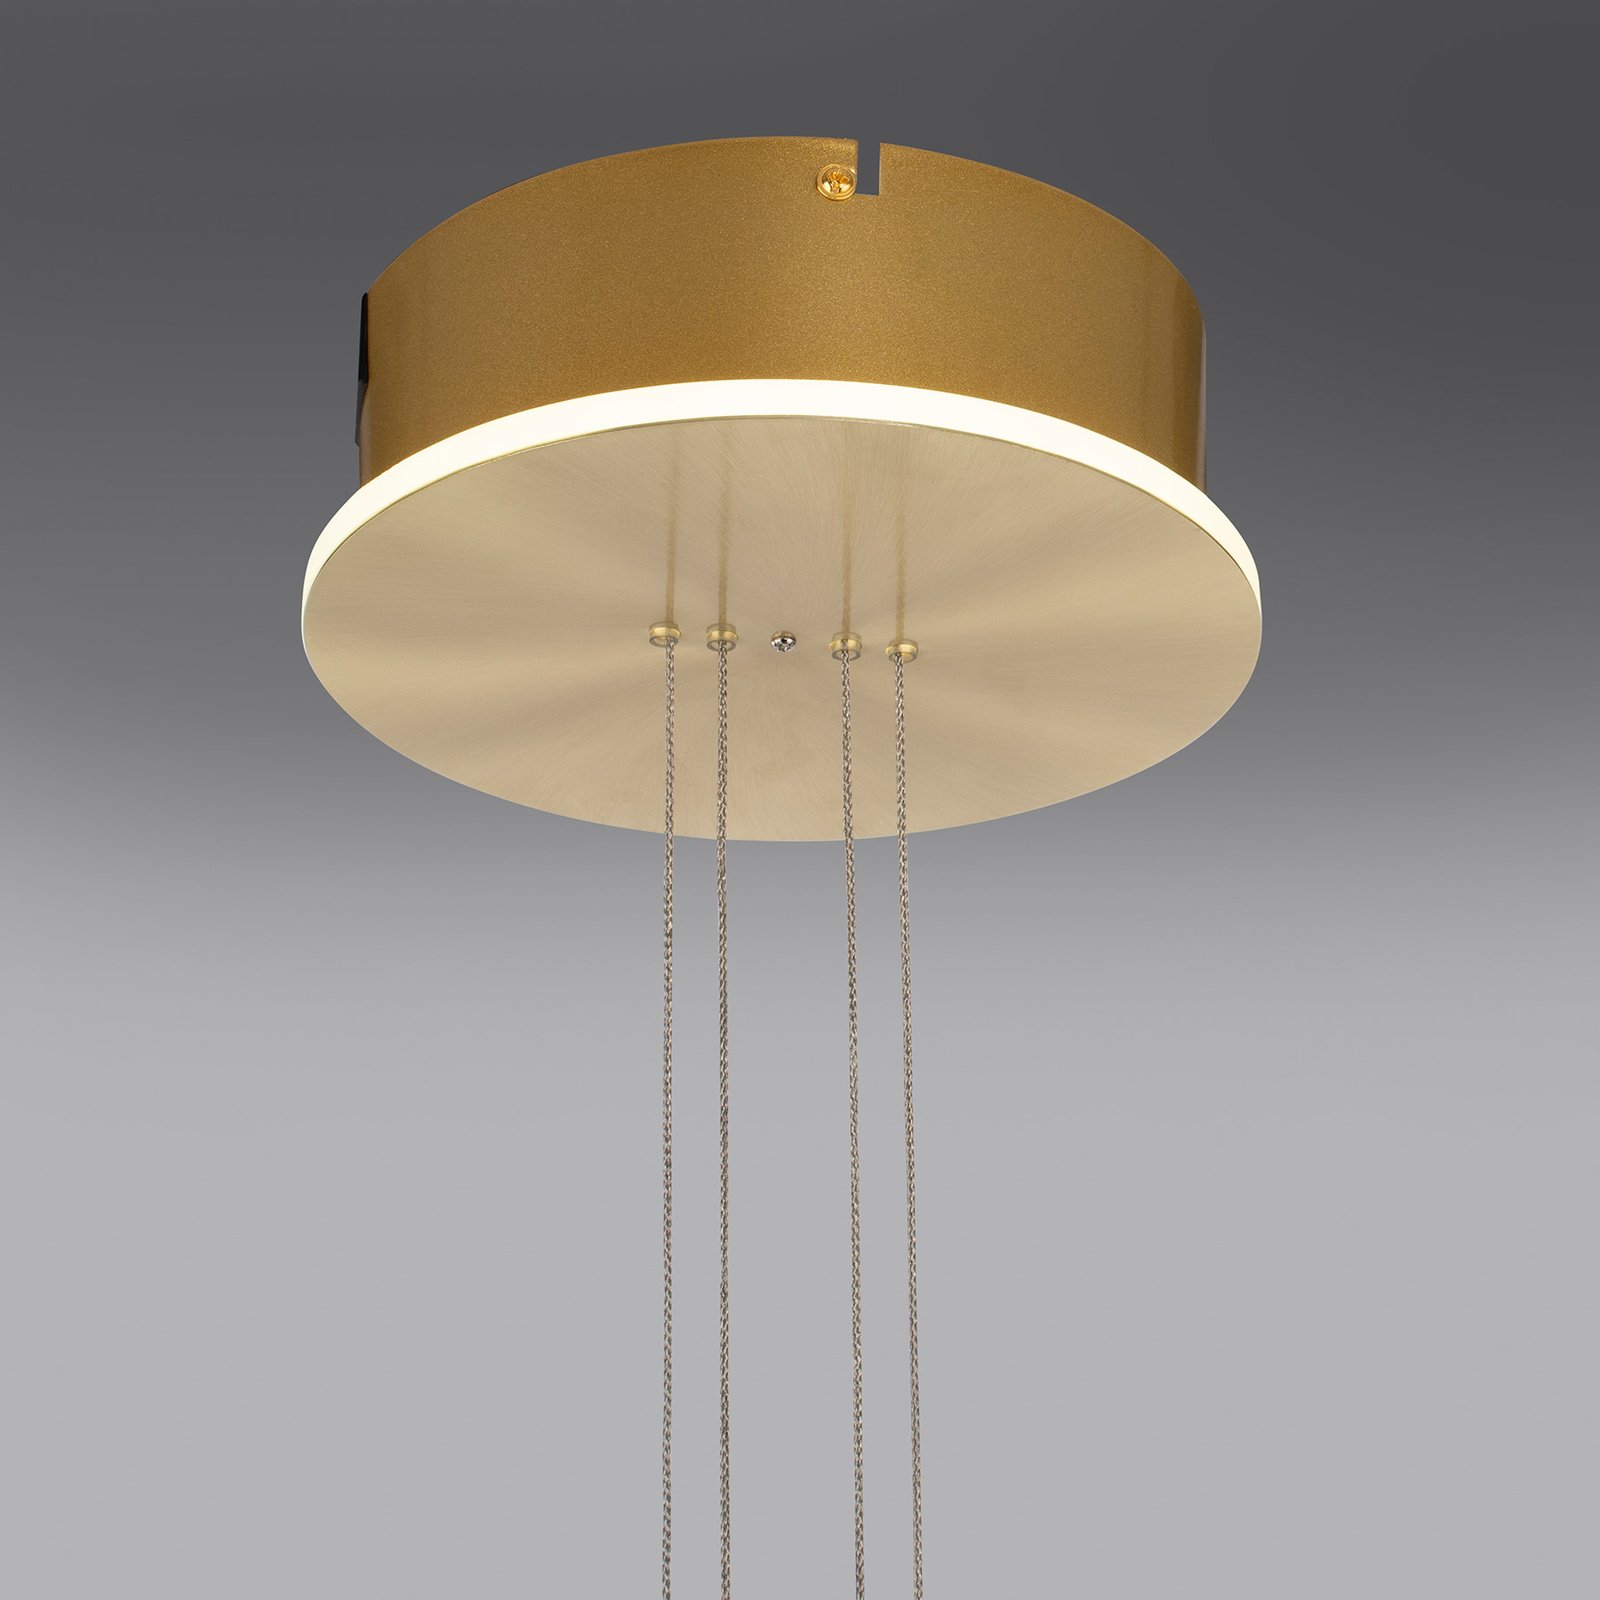 Paul Neuhaus Q-ETIENNE LED sospesa 1 luce, ottone